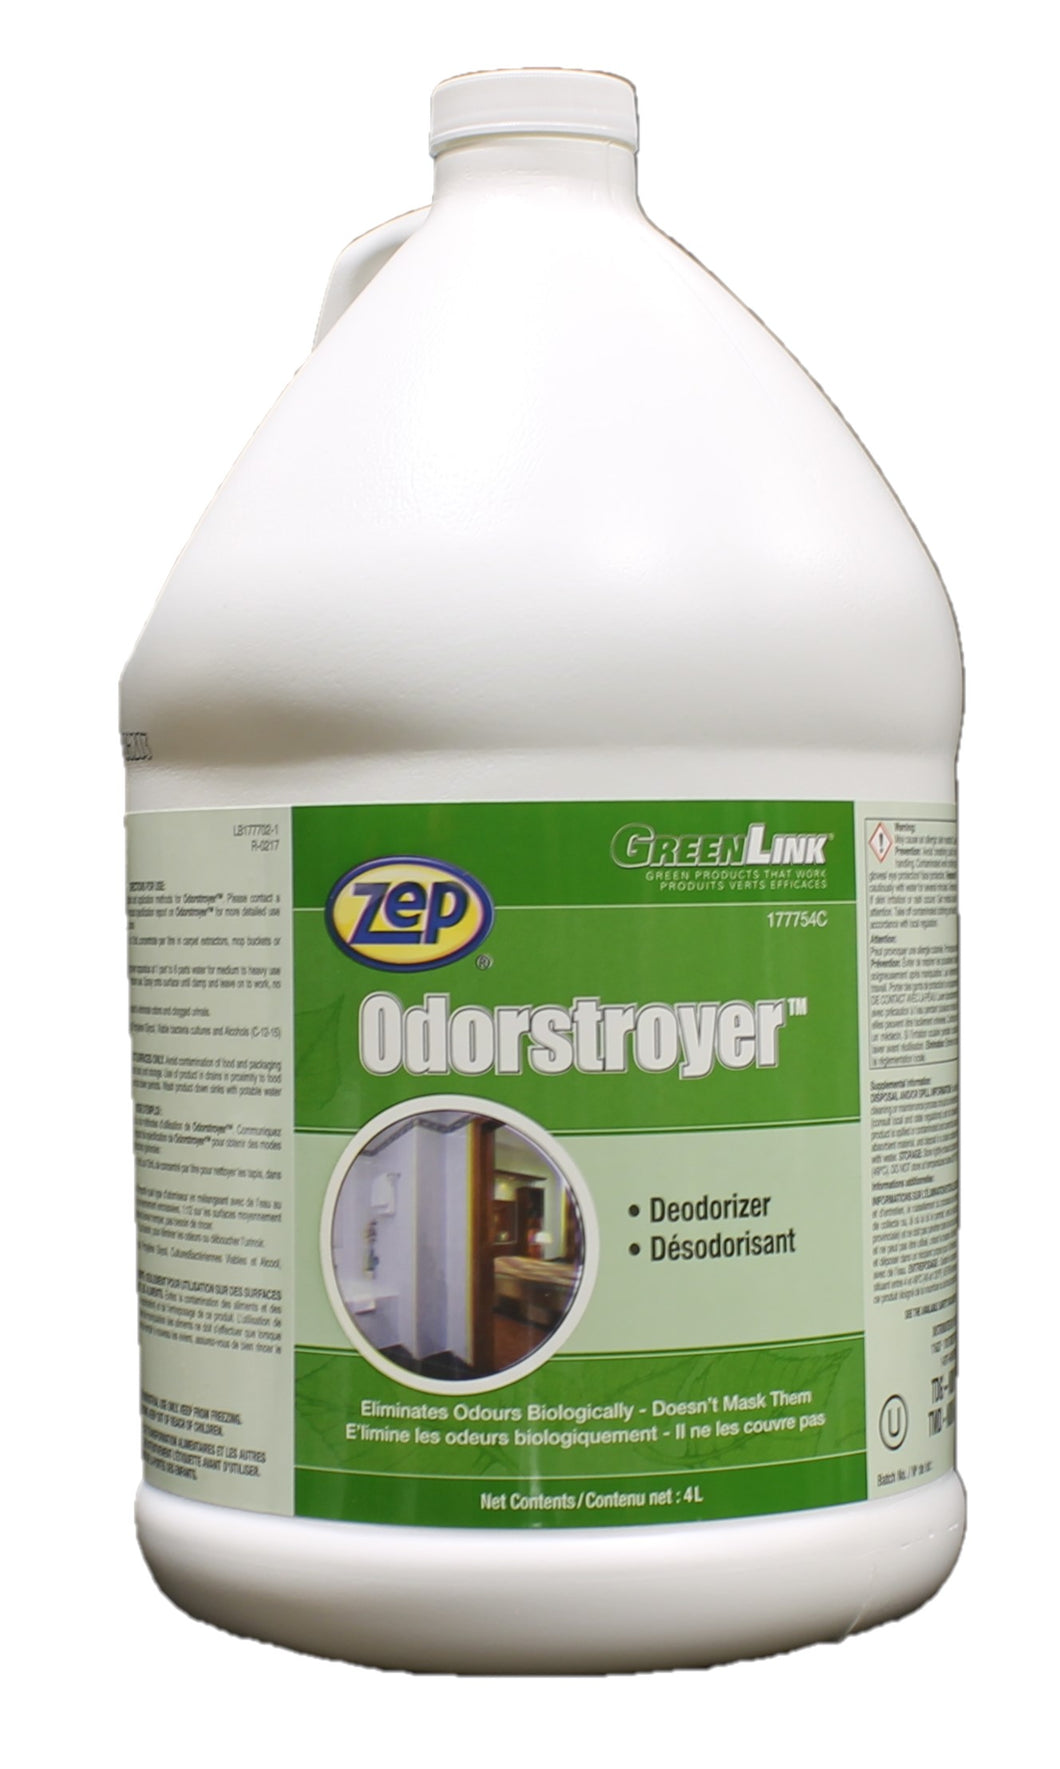 Zep Odorstroyer (1 Gallon)